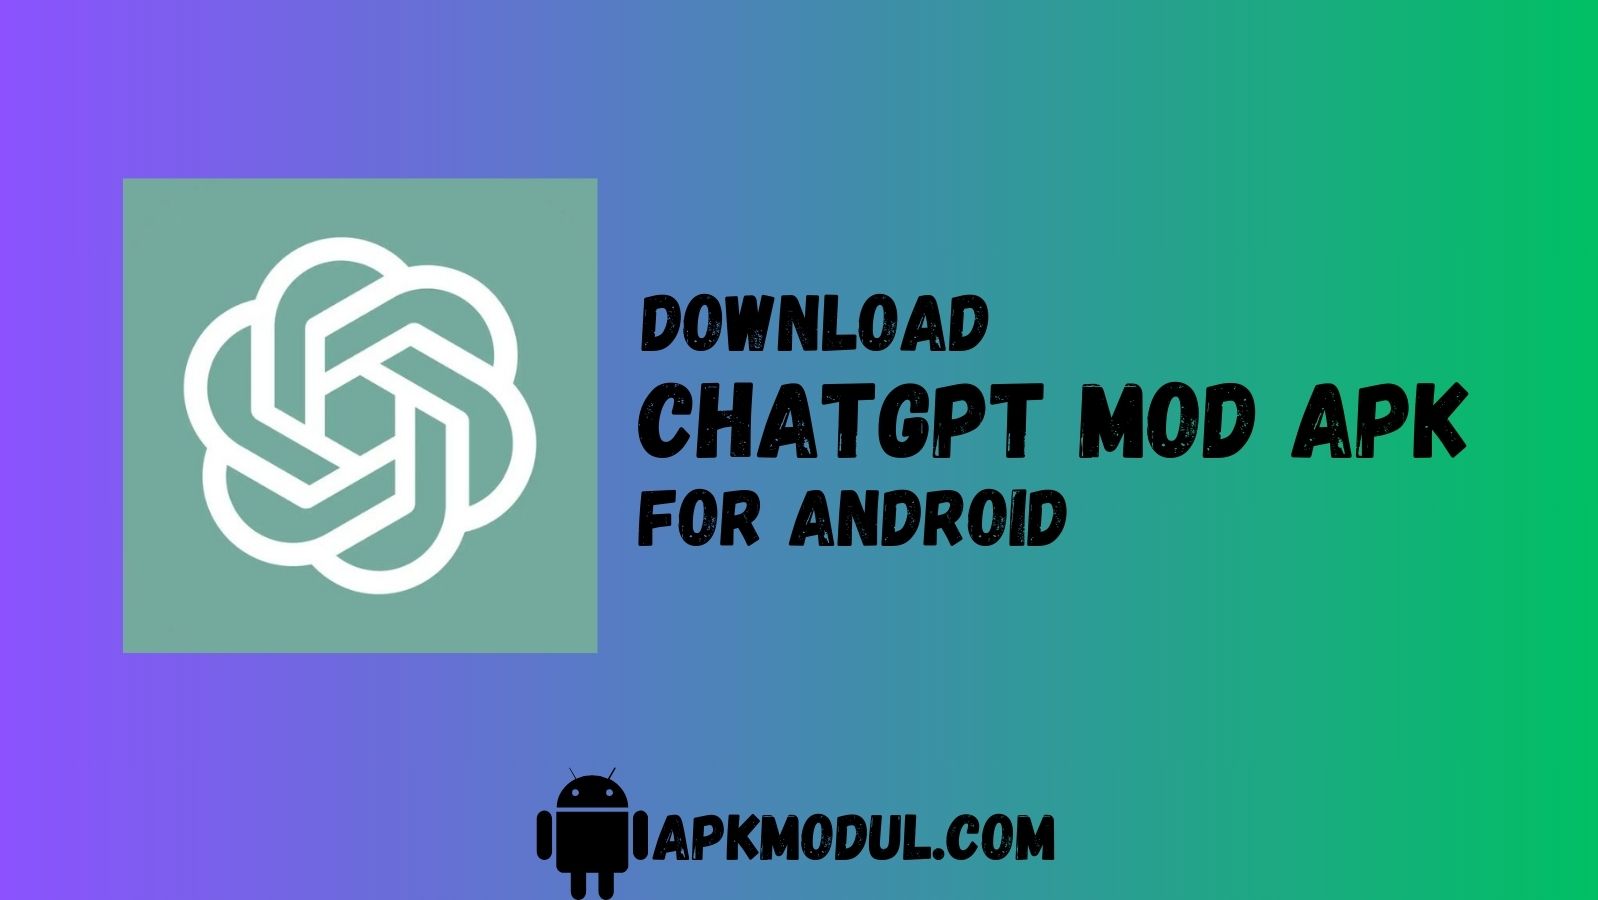 ChatGPT Mod App